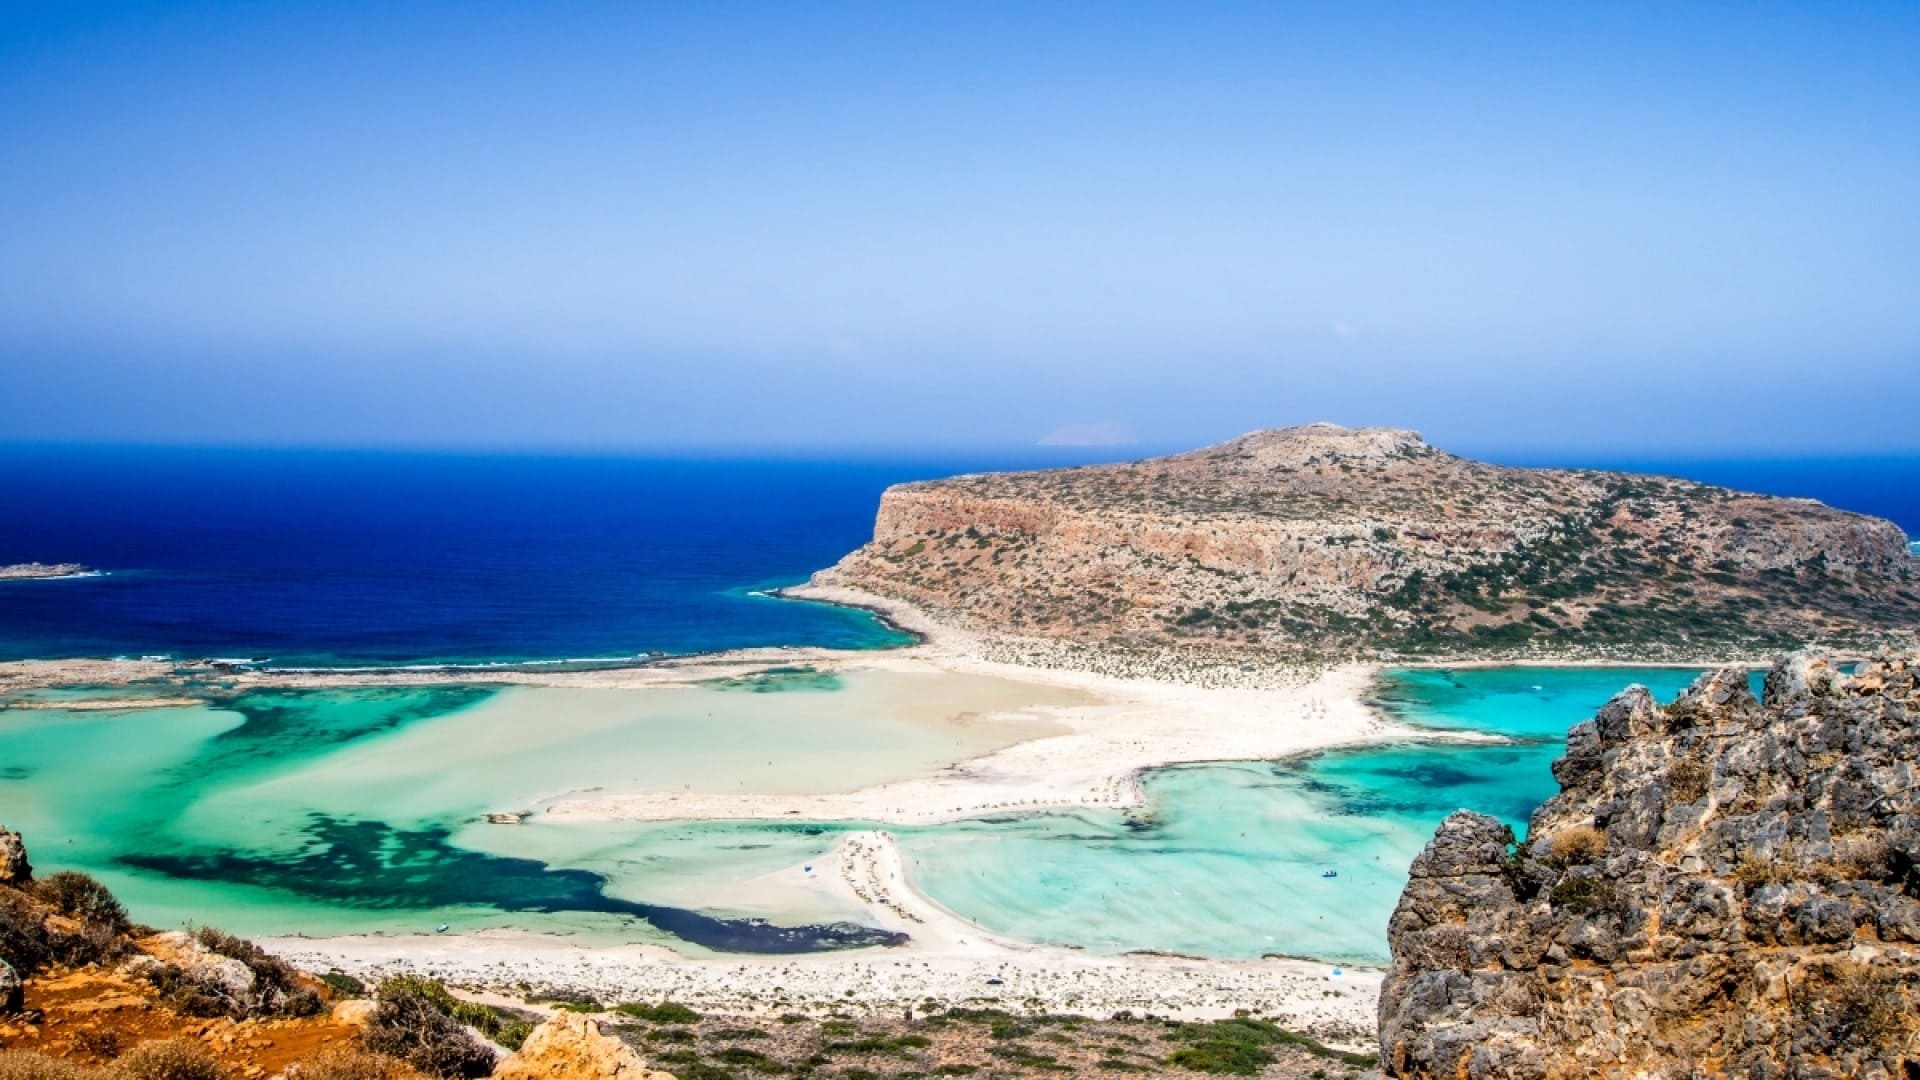 Tips for an enjoyable trip to Crete